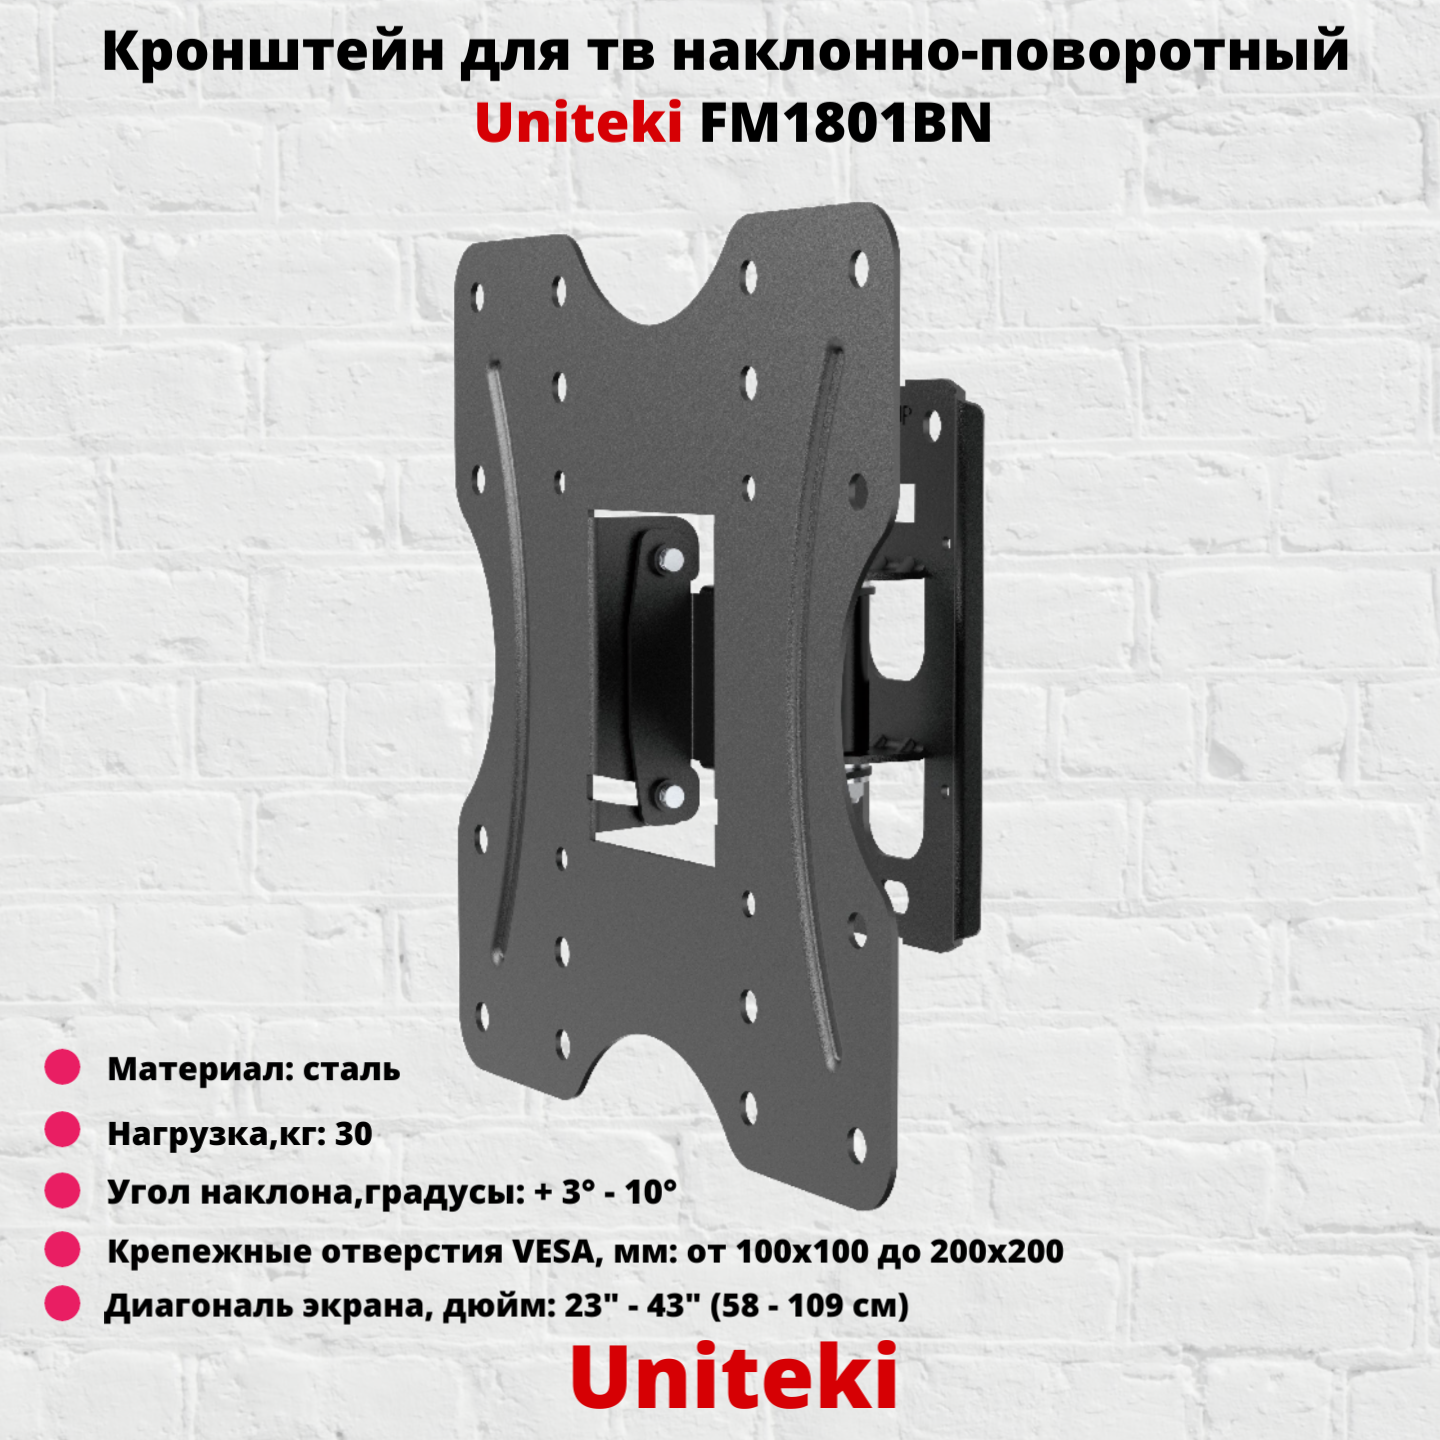 Наклонно-поворотный кронштейн для телевизора Uniteki FM1801BN 23-43 черный